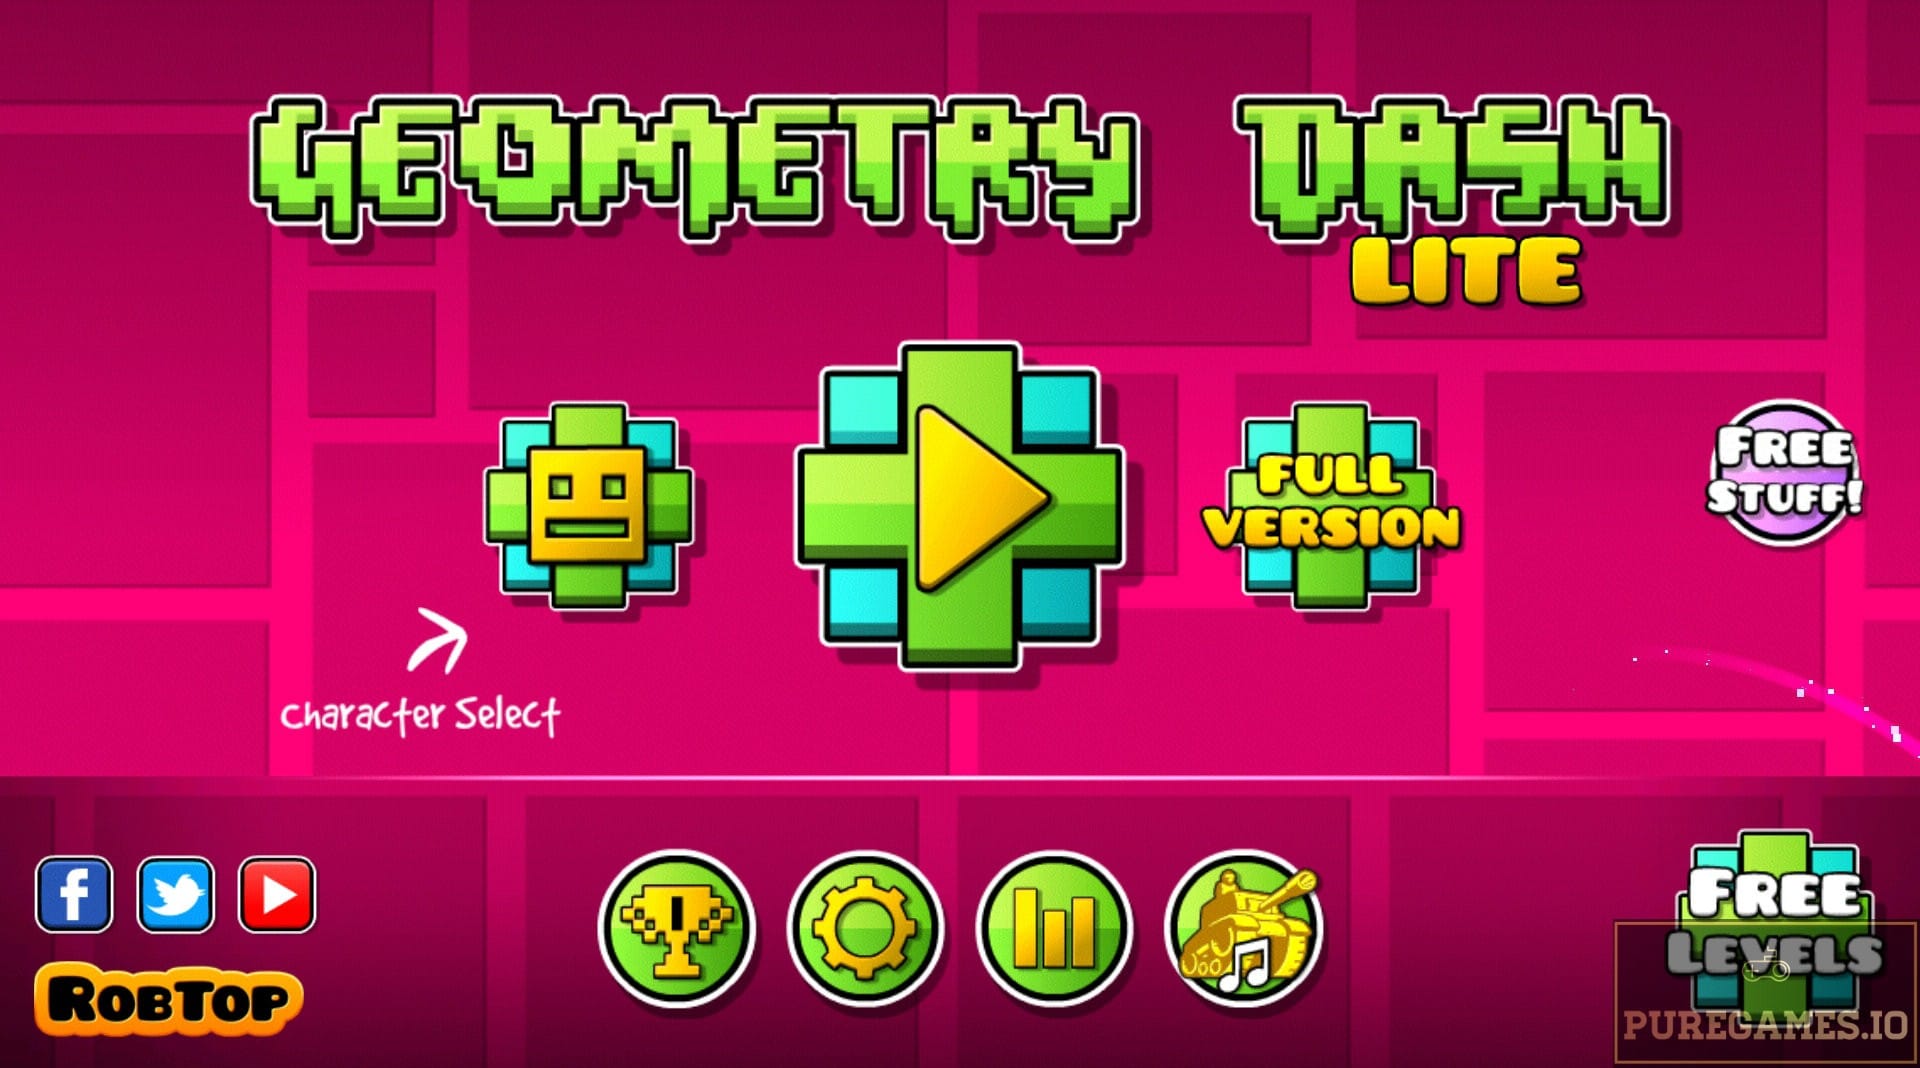 download geometry dash full version free